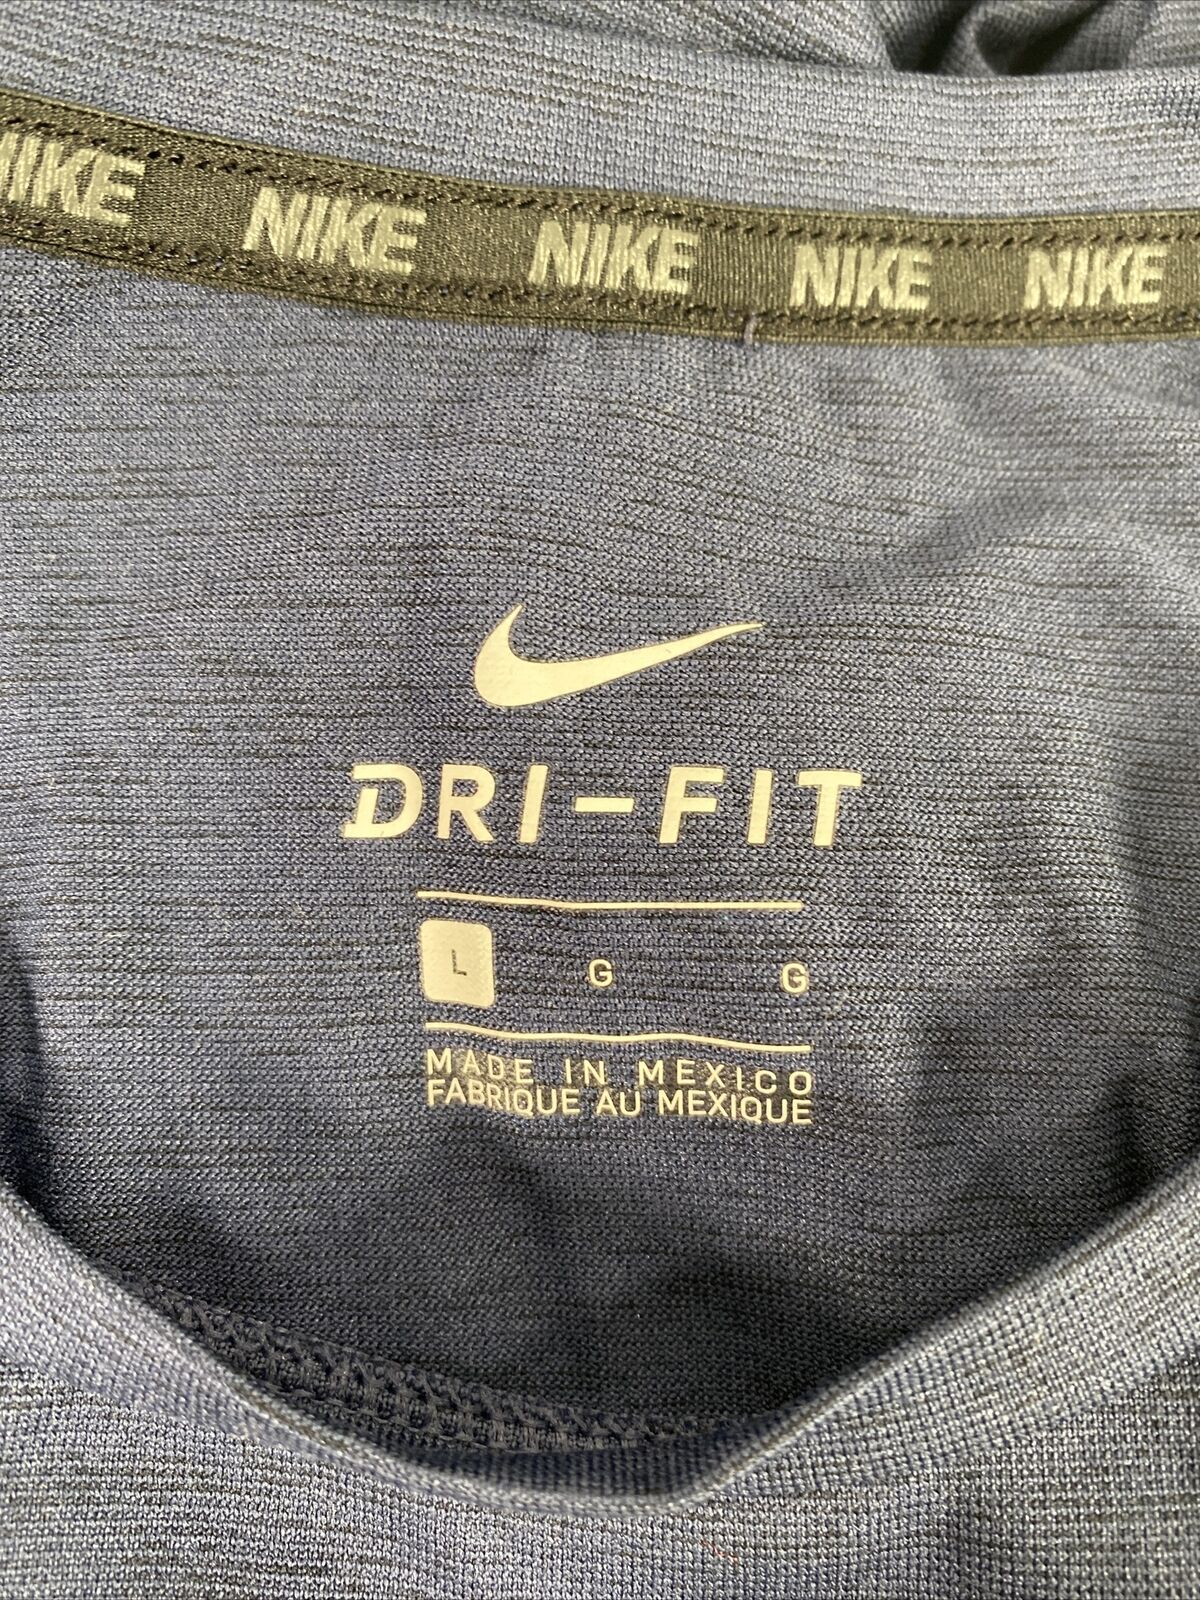 Nike Men's Blue Dri-Fit Short Sleeve Athletic T-Shirt - L